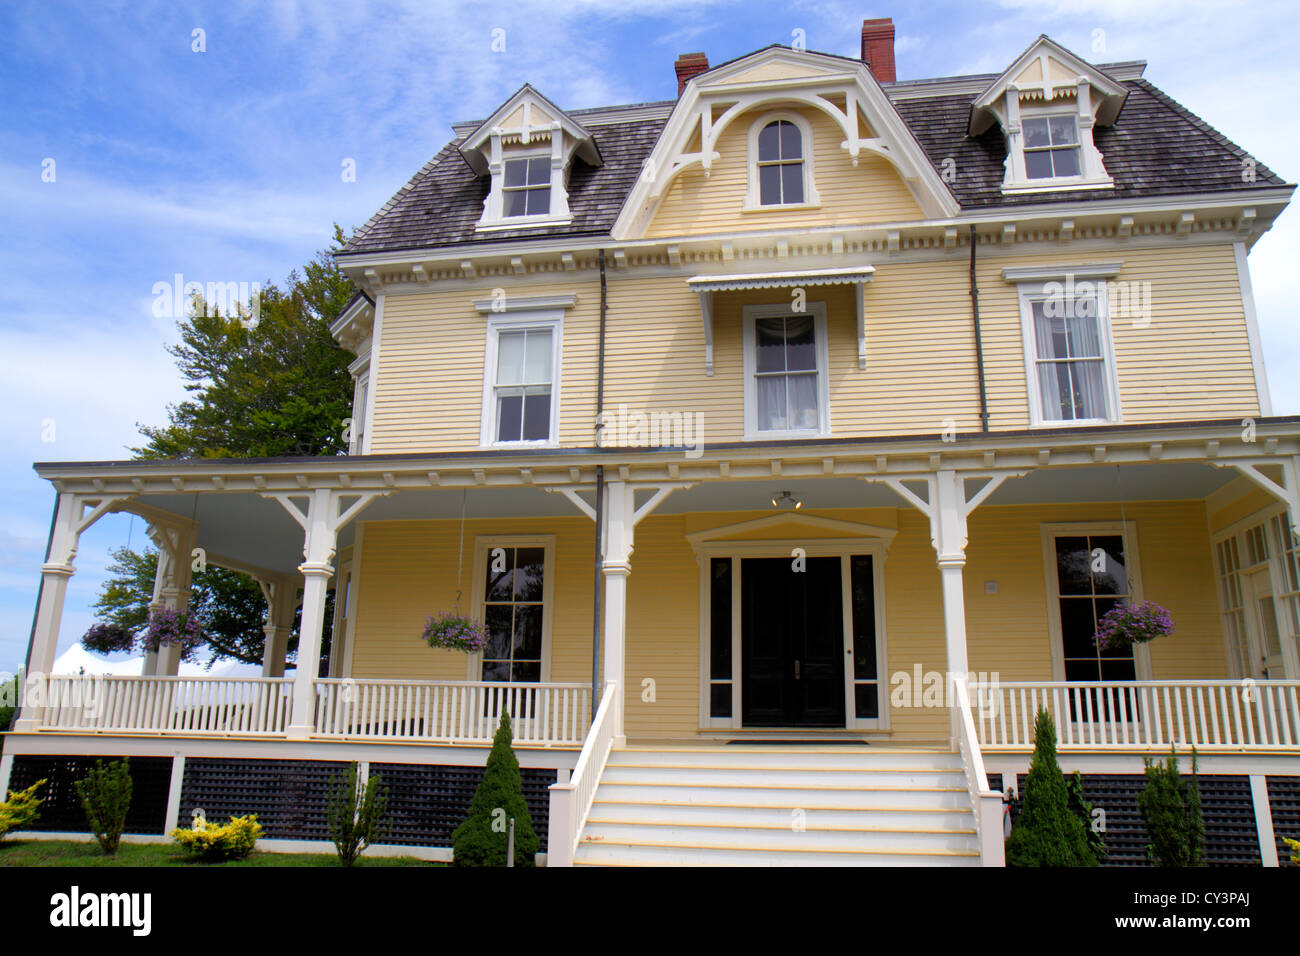 Rhode Island Newport,Fort Ft. Adams State Park,Eisenhower House,Summer White House,RI120820014 Stock Photo